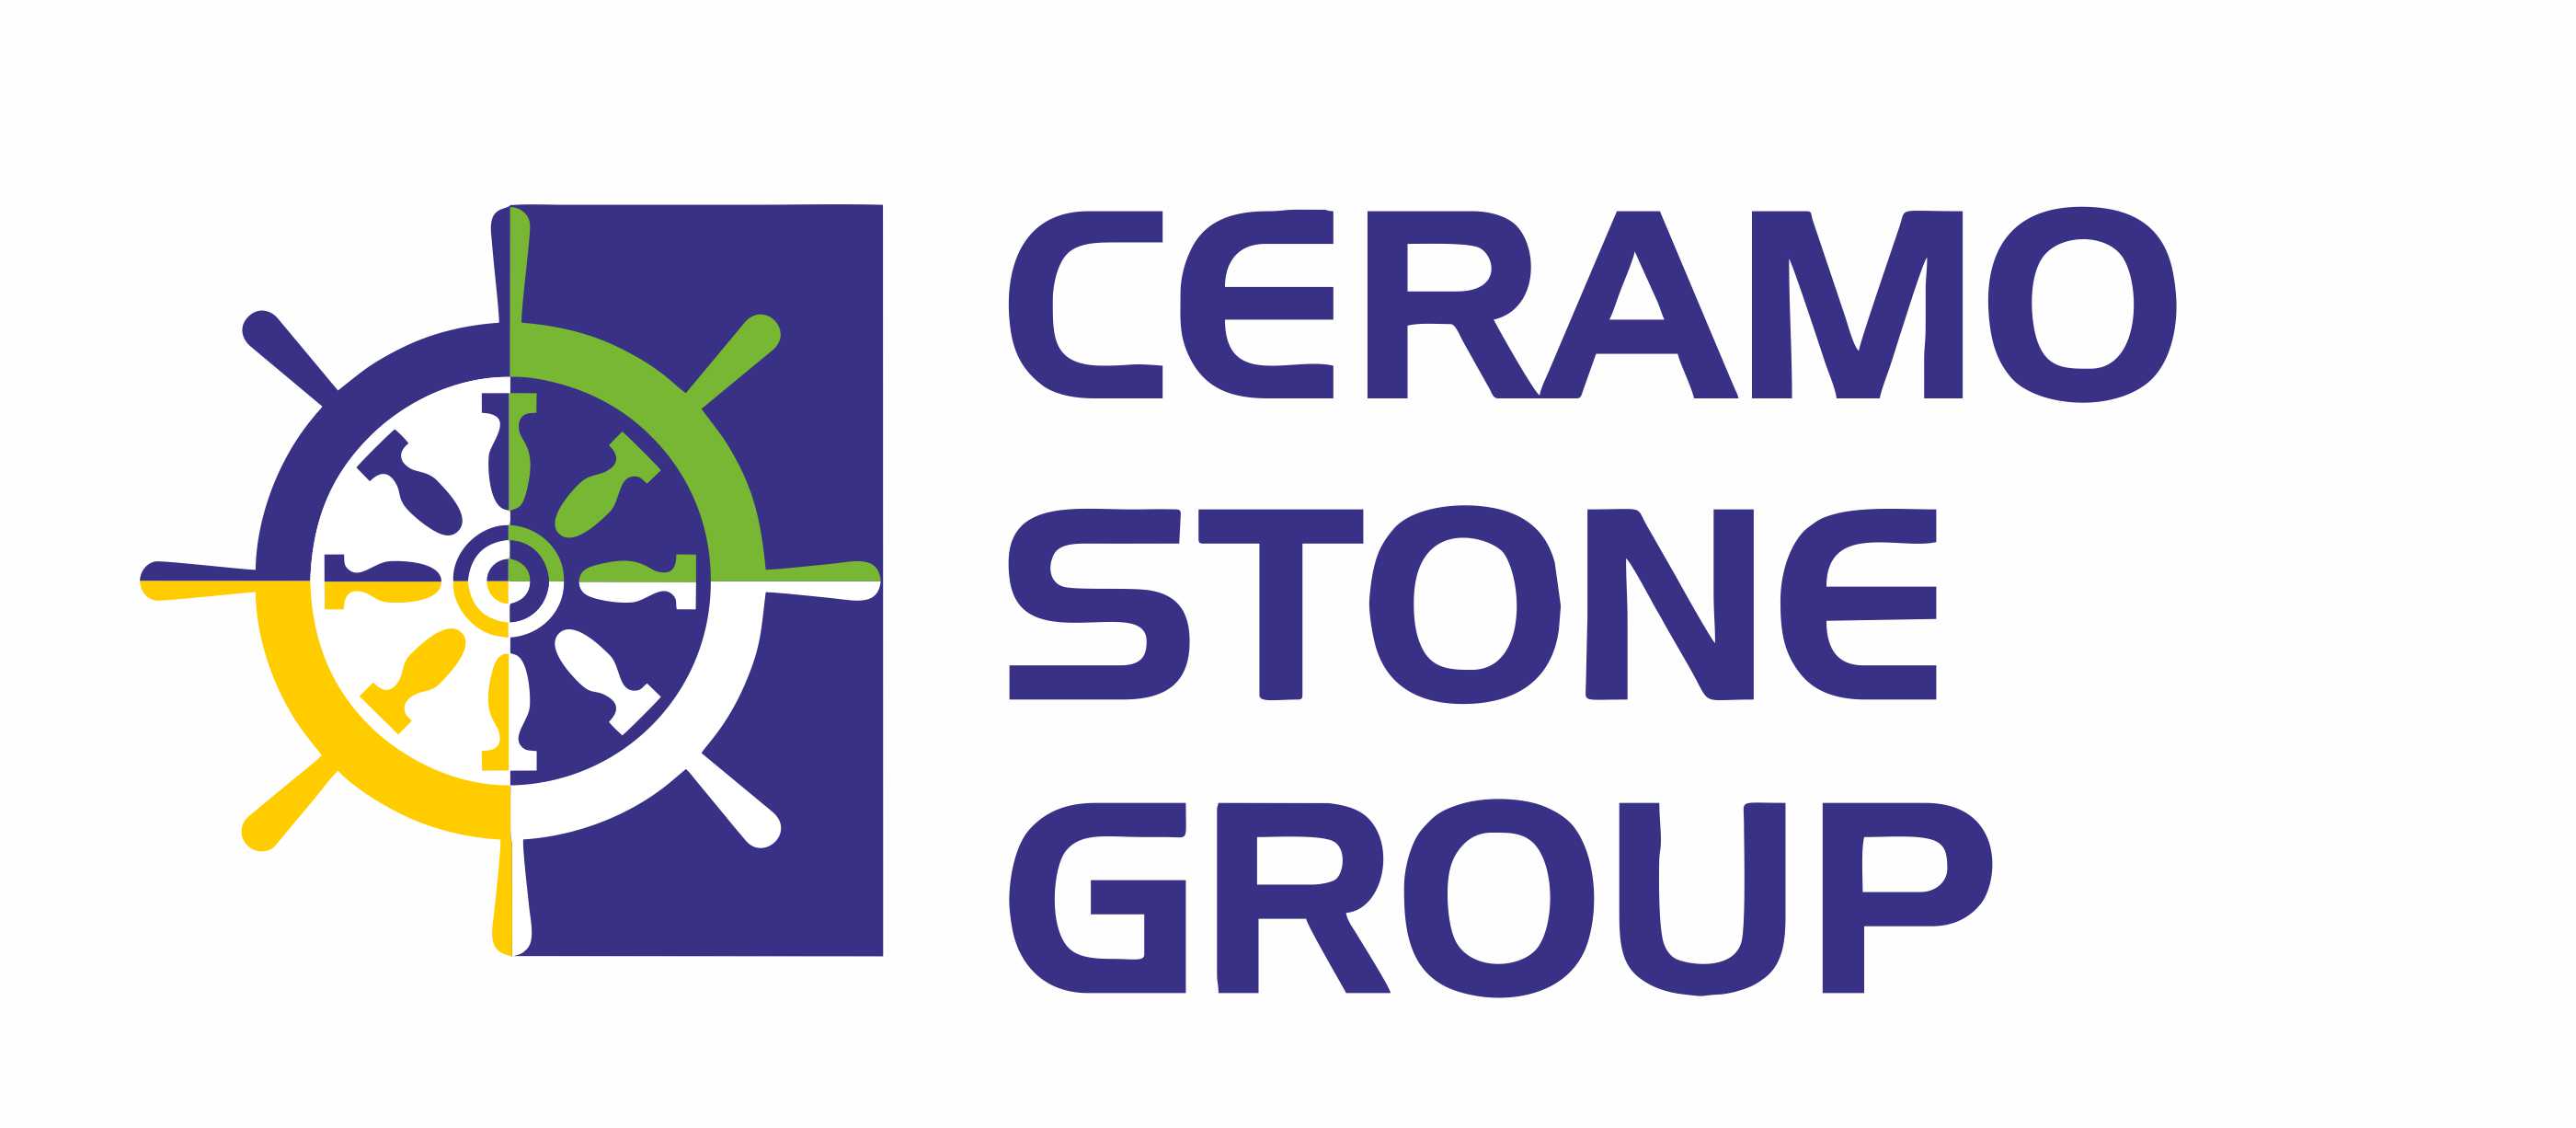 Ceramo stone. Ceramo Stone Group. Ceramo Stone Group Шымкент. Mega Stone Group logo. Stone Group Moldova.